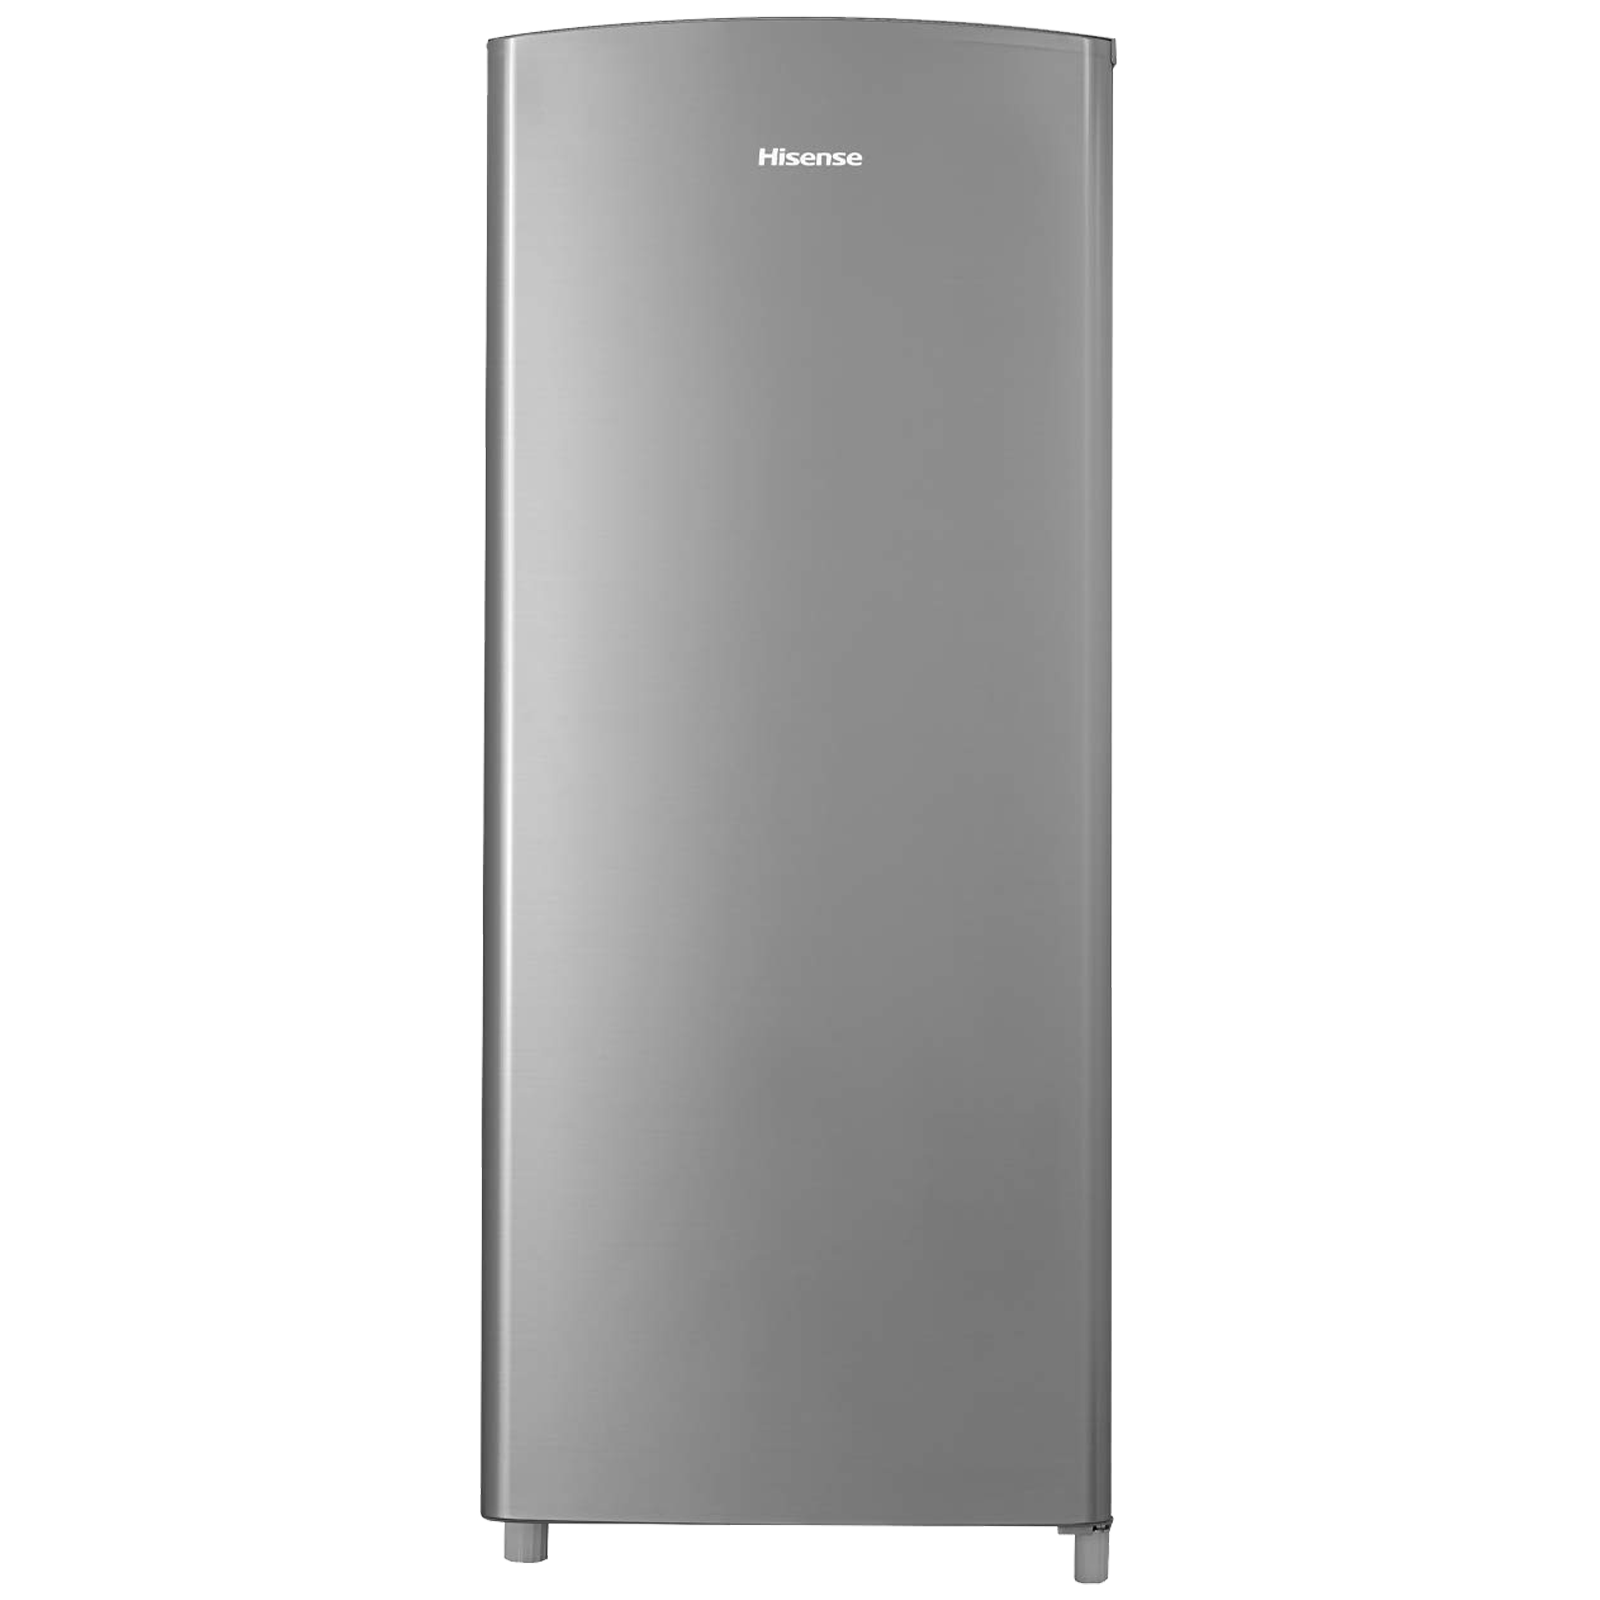 Hisense 185 Litres 2 Star Manual Single Door Refrigerator (Direct Cool Technology, R229D4ASB2, Silver)_1